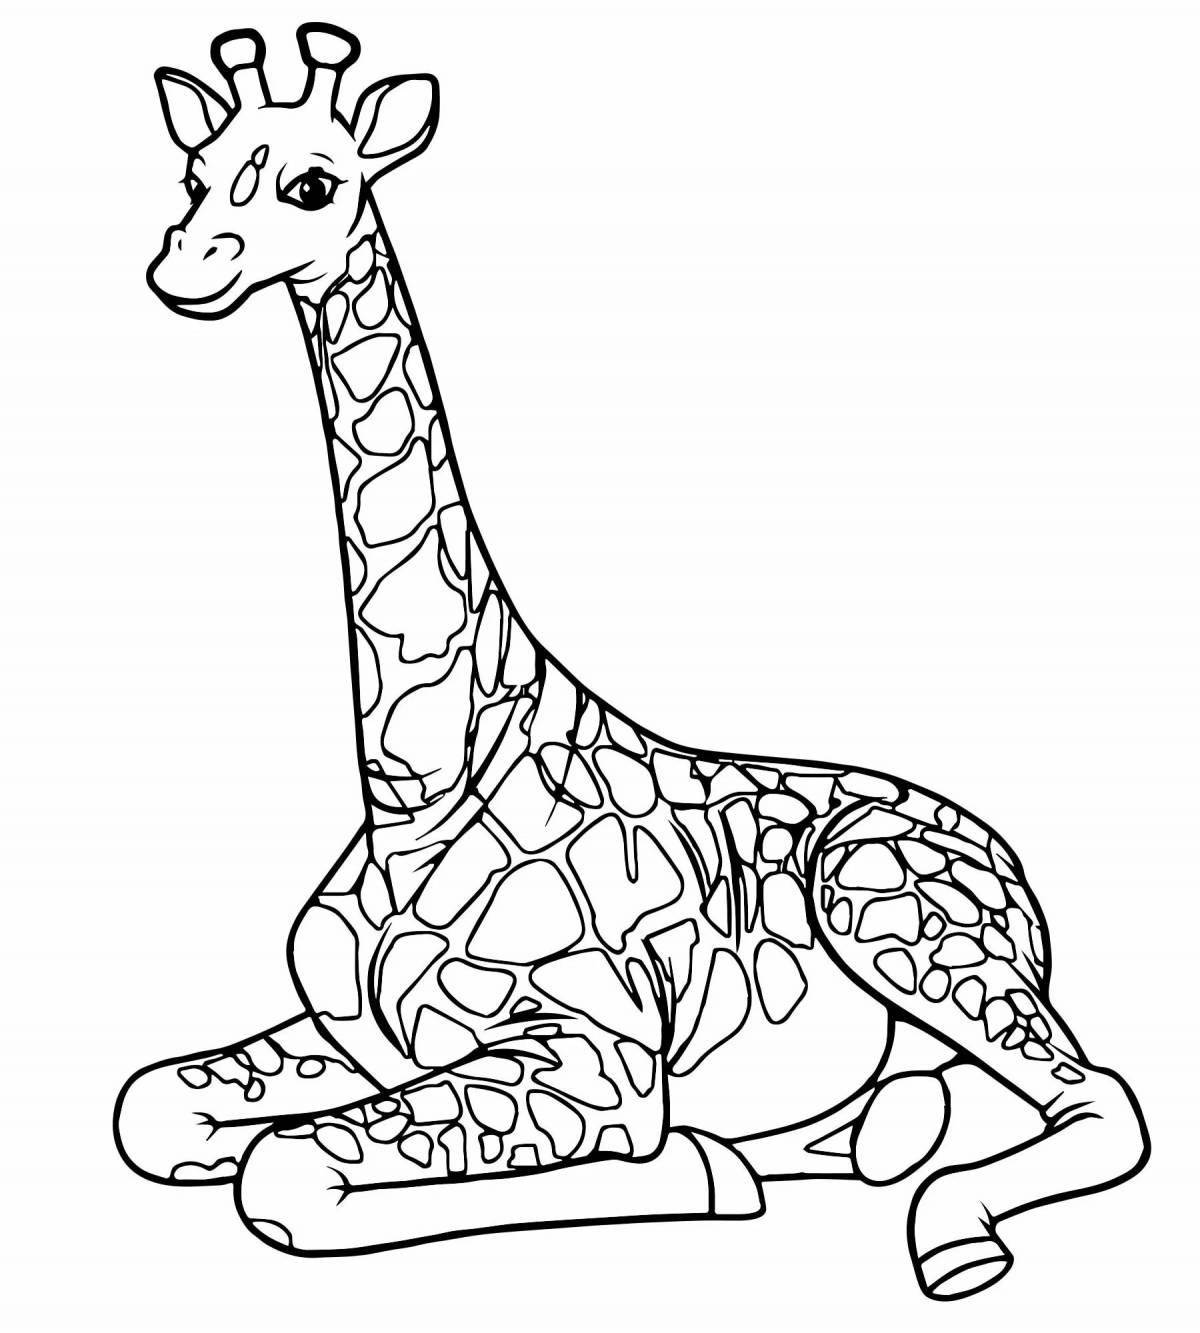 Giraffe fun coloring book for 6-7 year olds